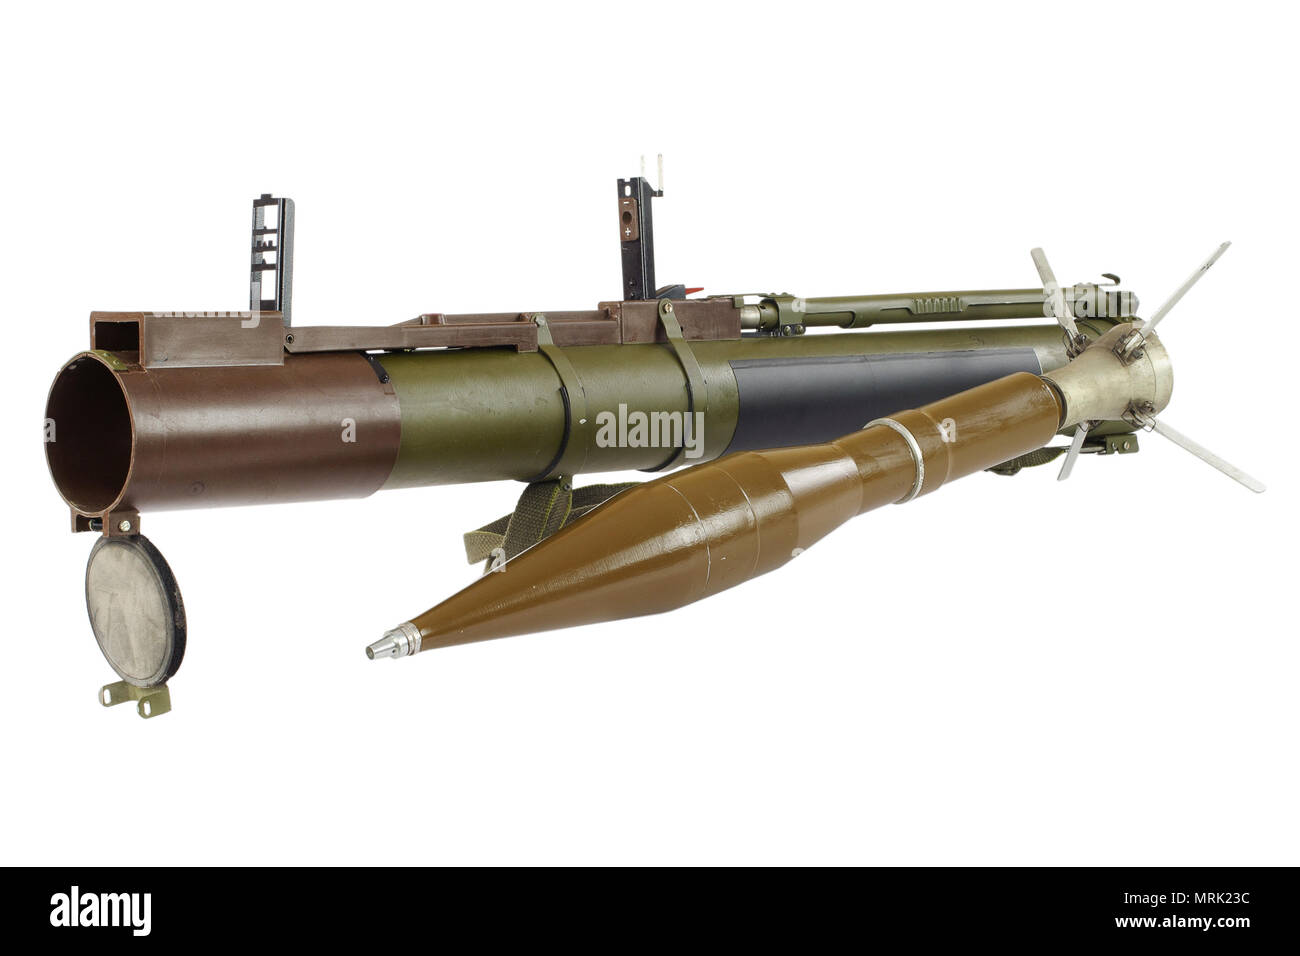 anti-tank rocket propelled grenade launcher 'bazooka' isolated on white Stock Photo